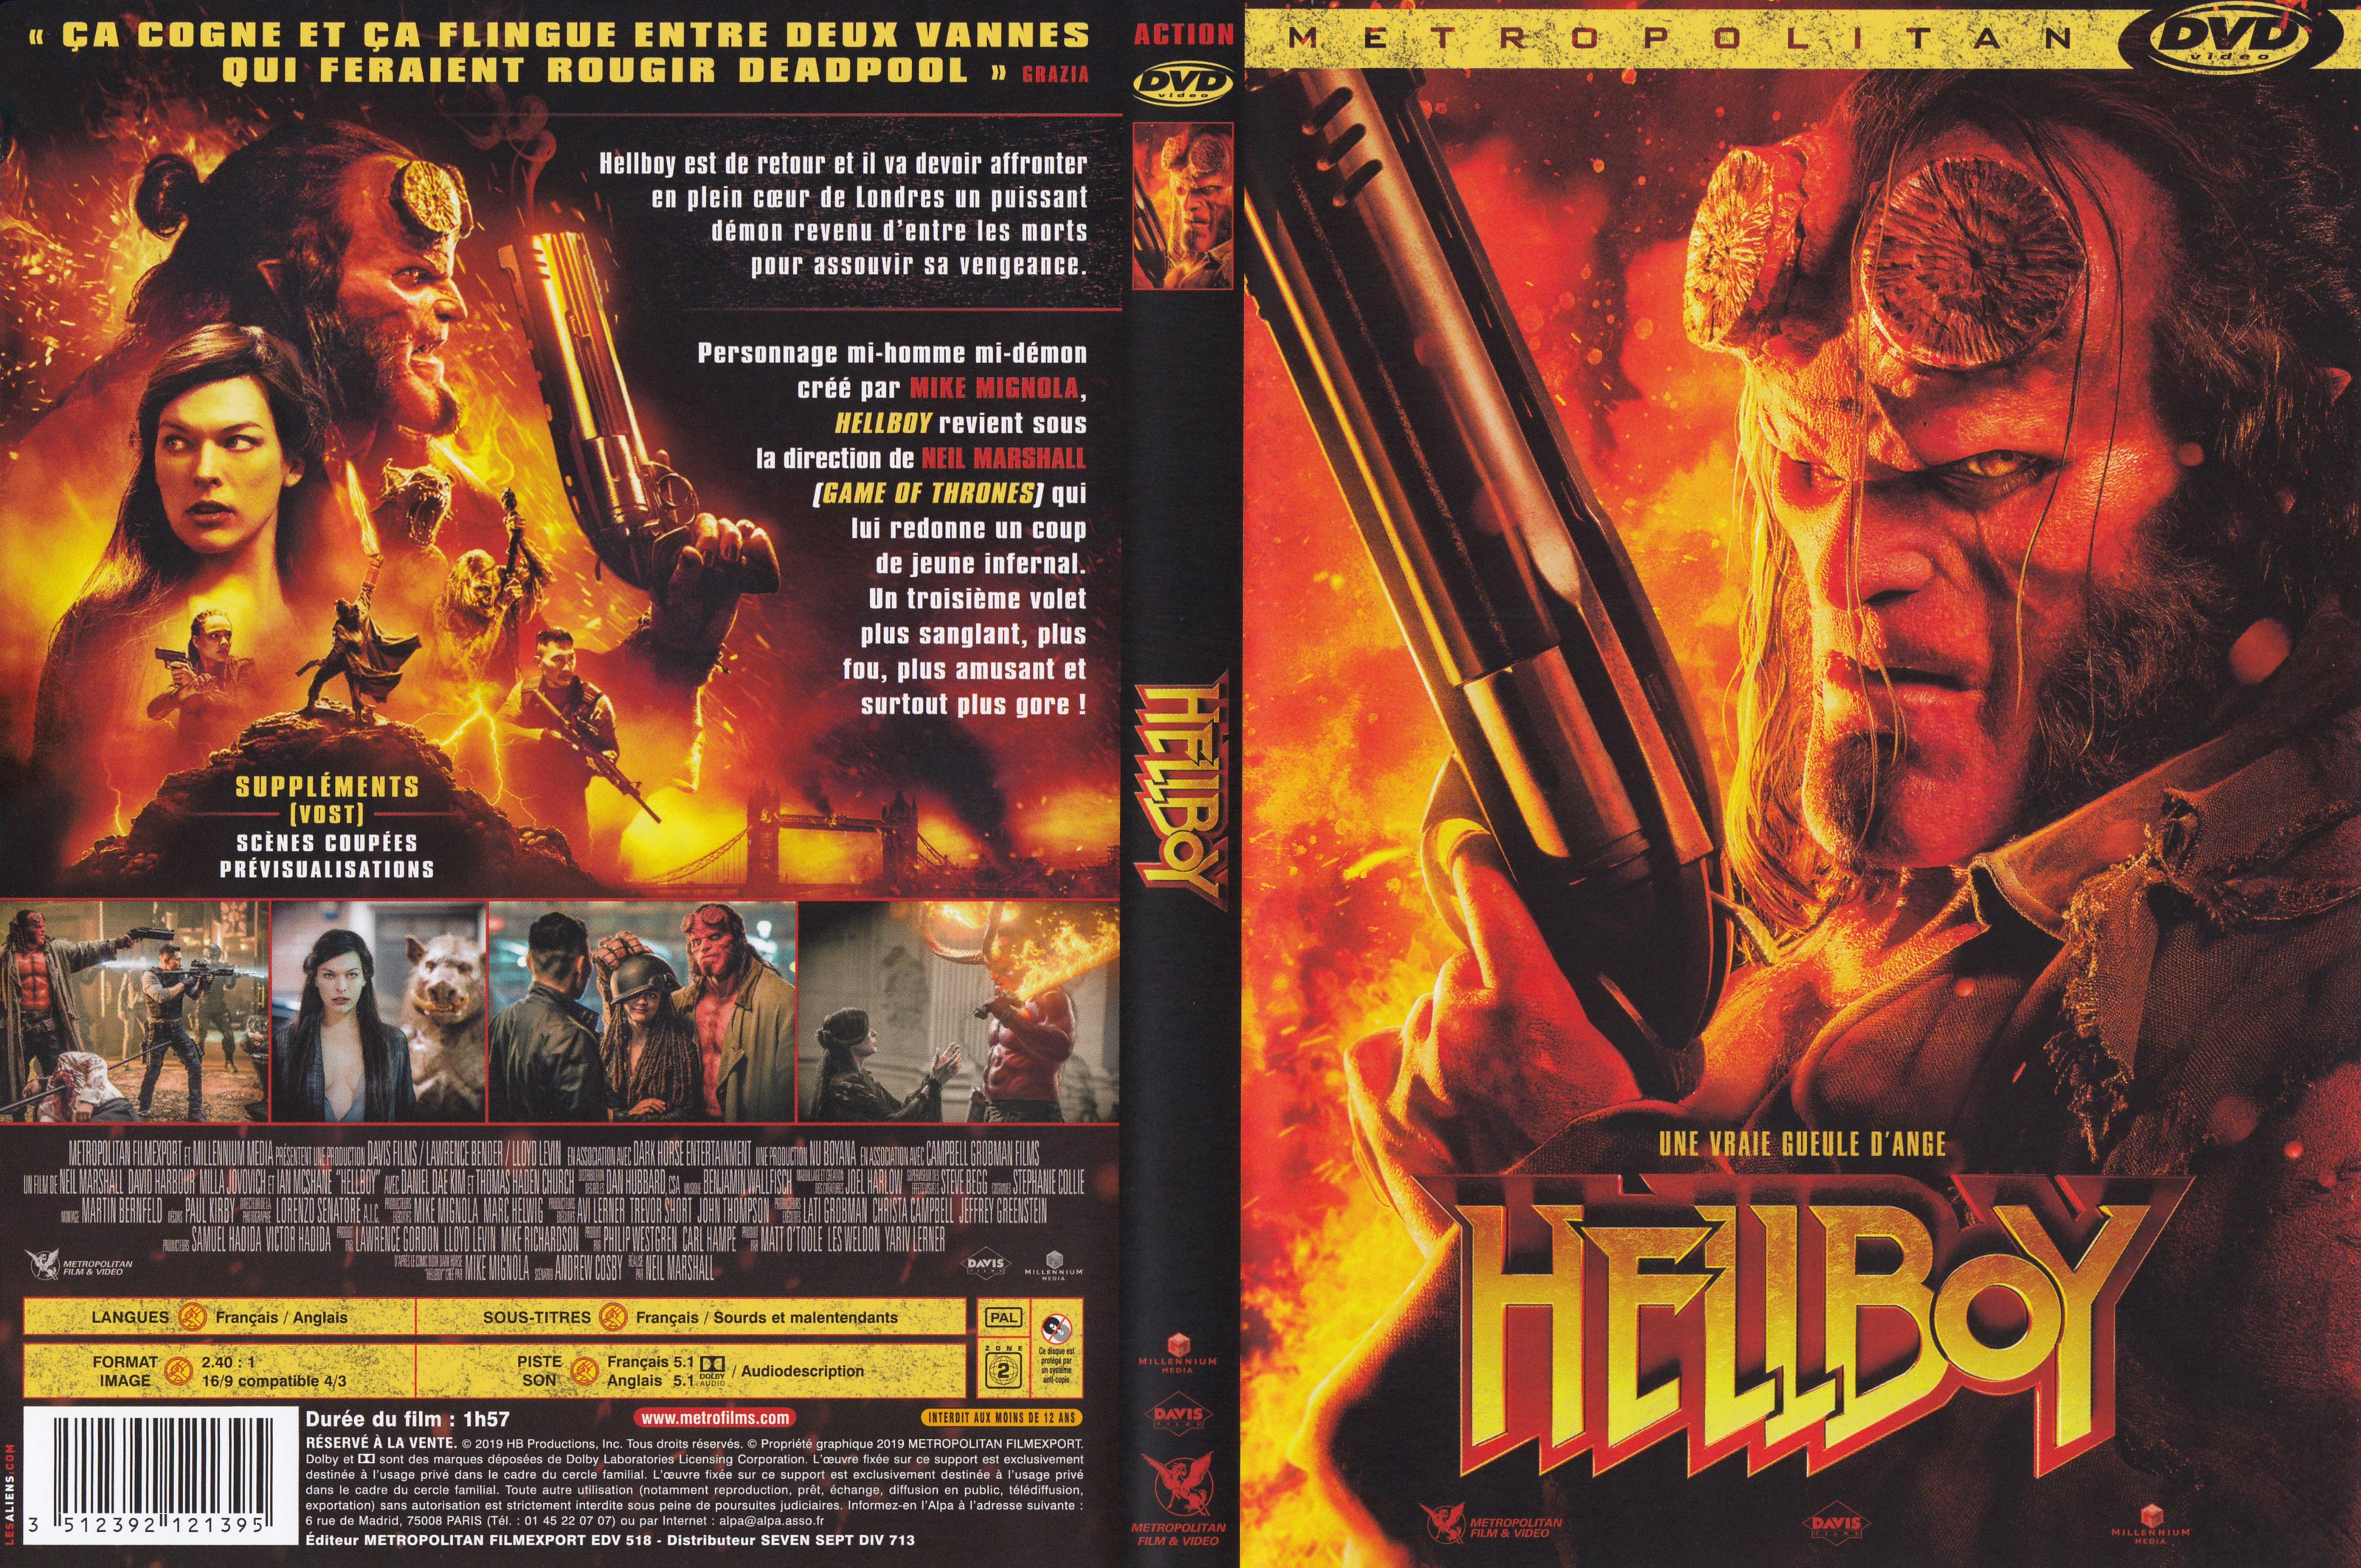 Jaquette DVD Hellboy (2019)